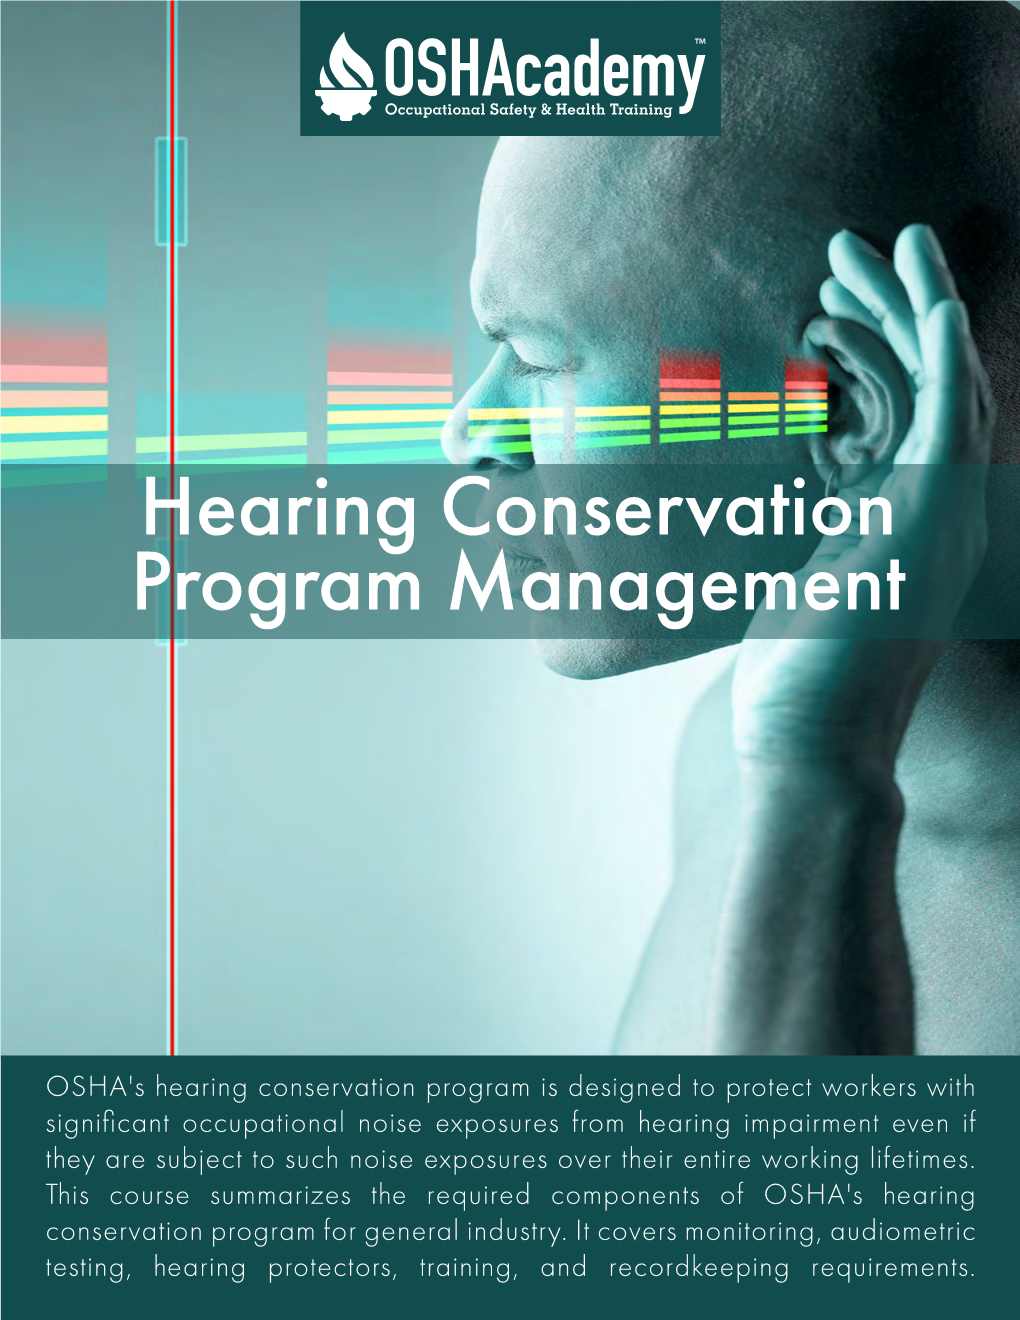 751 Hearing Conservation Program Management